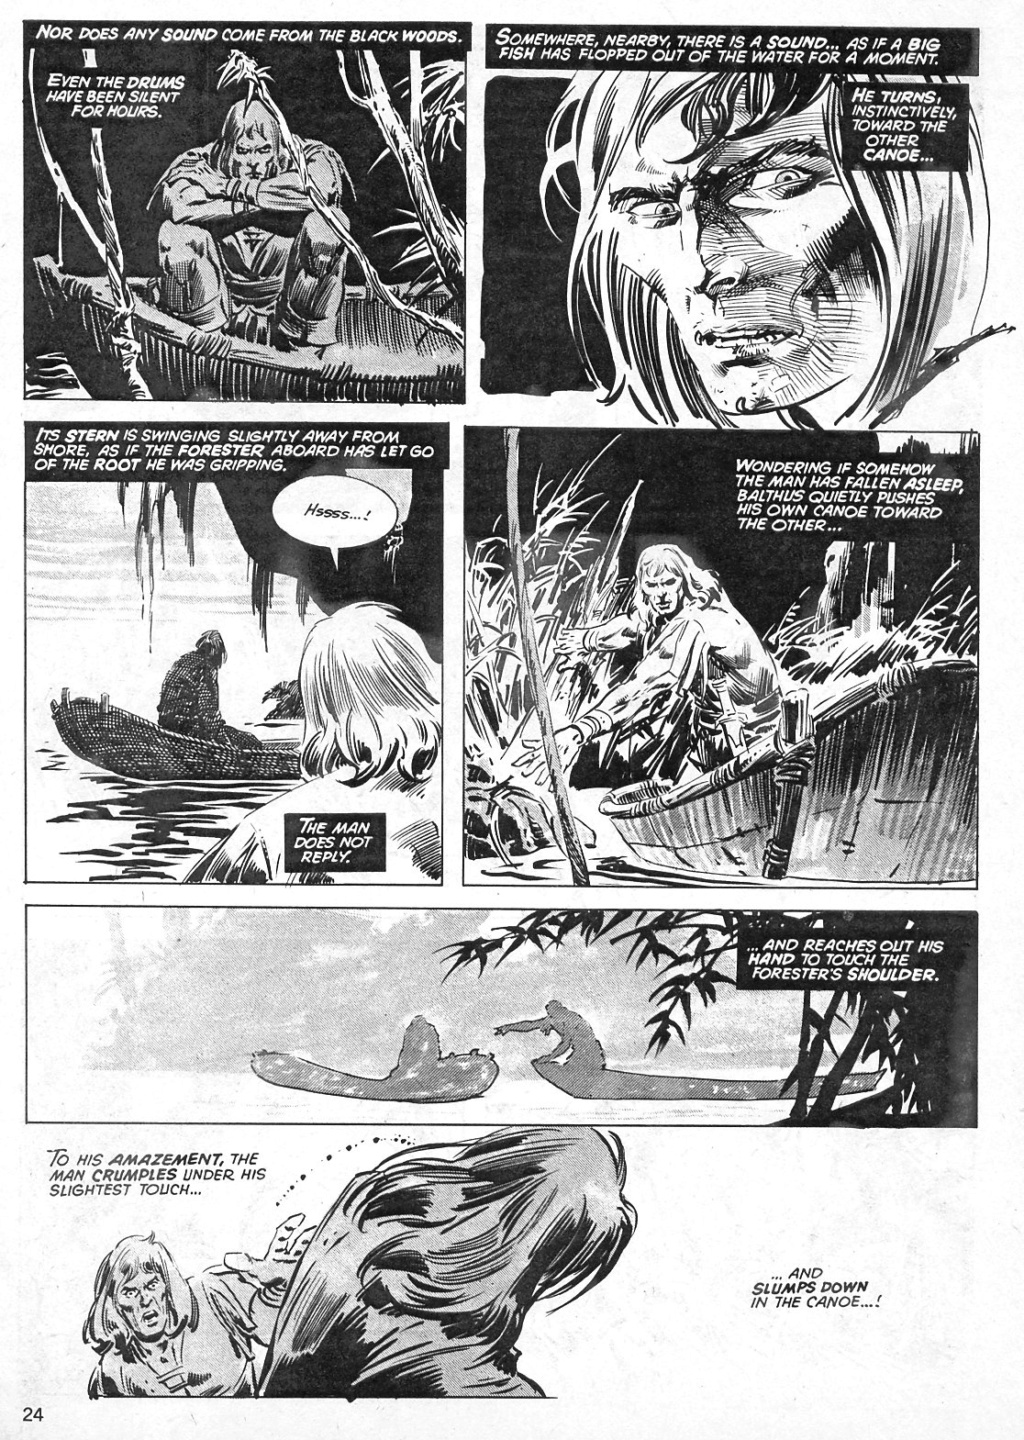 CONAN  - Page 4 The_sa13